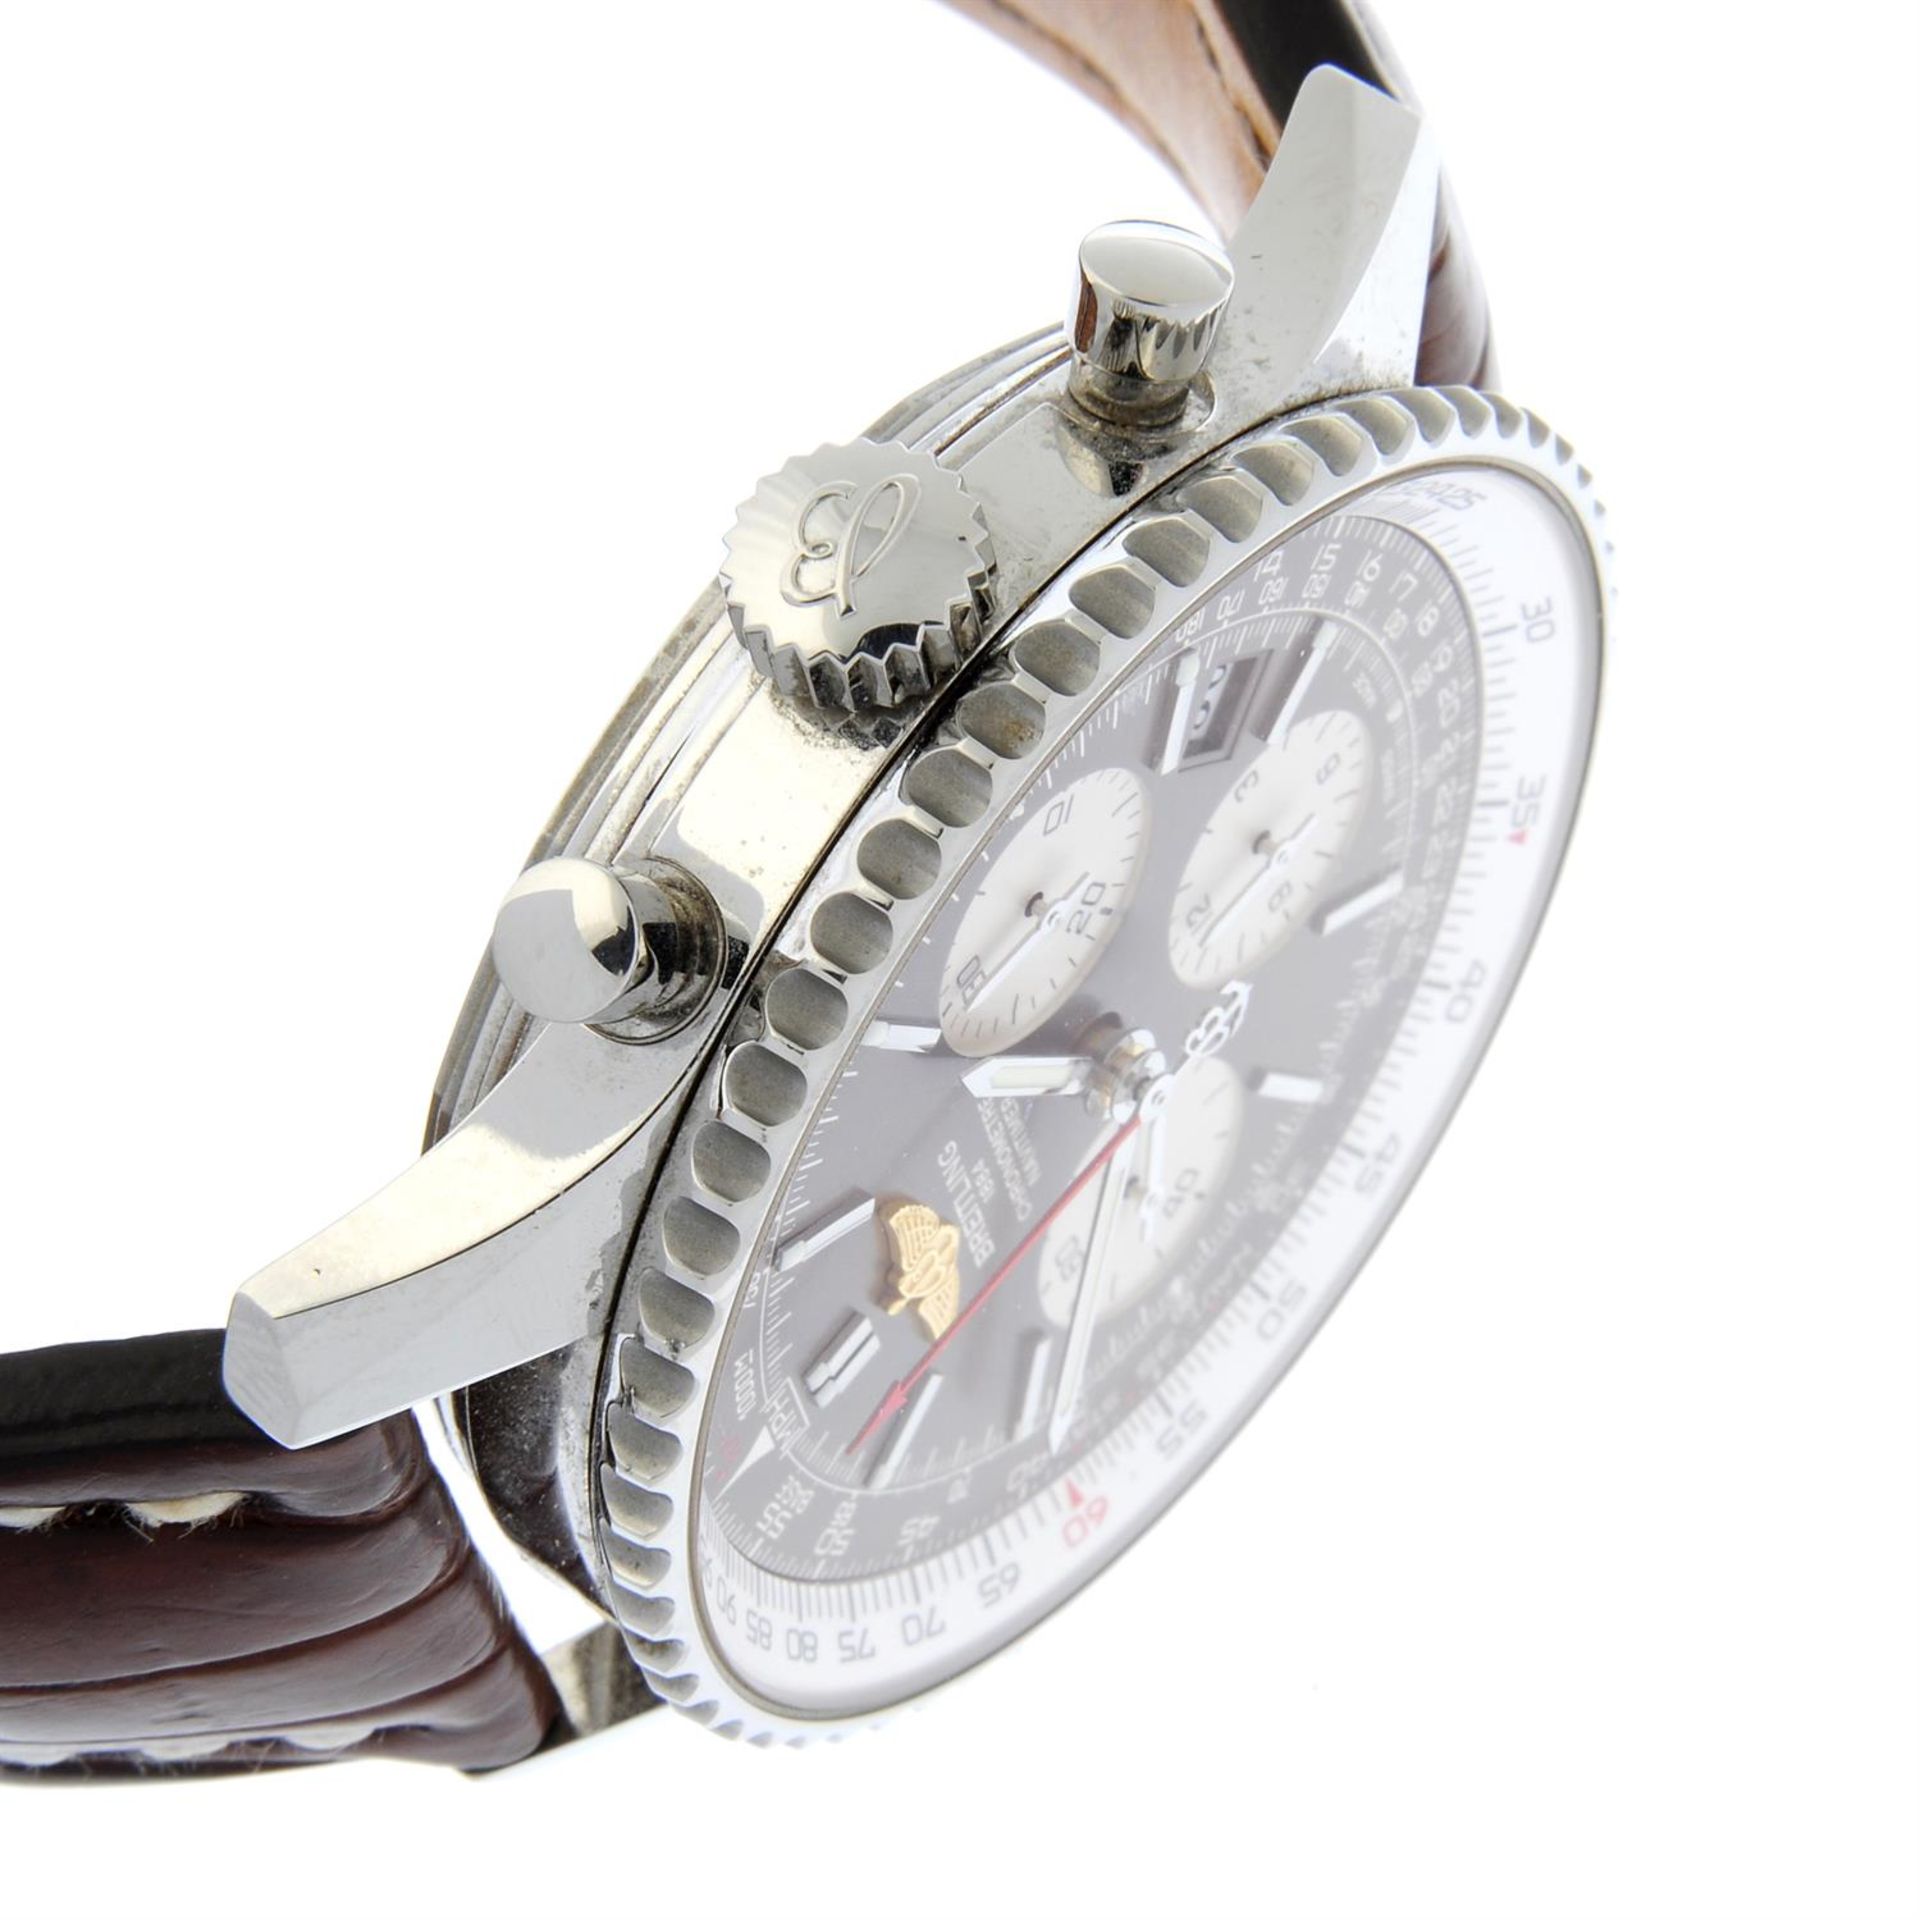 BREITLING - a limited edition stainless steel Navitimer chronograph wrist watch, 42mm. - Bild 3 aus 6